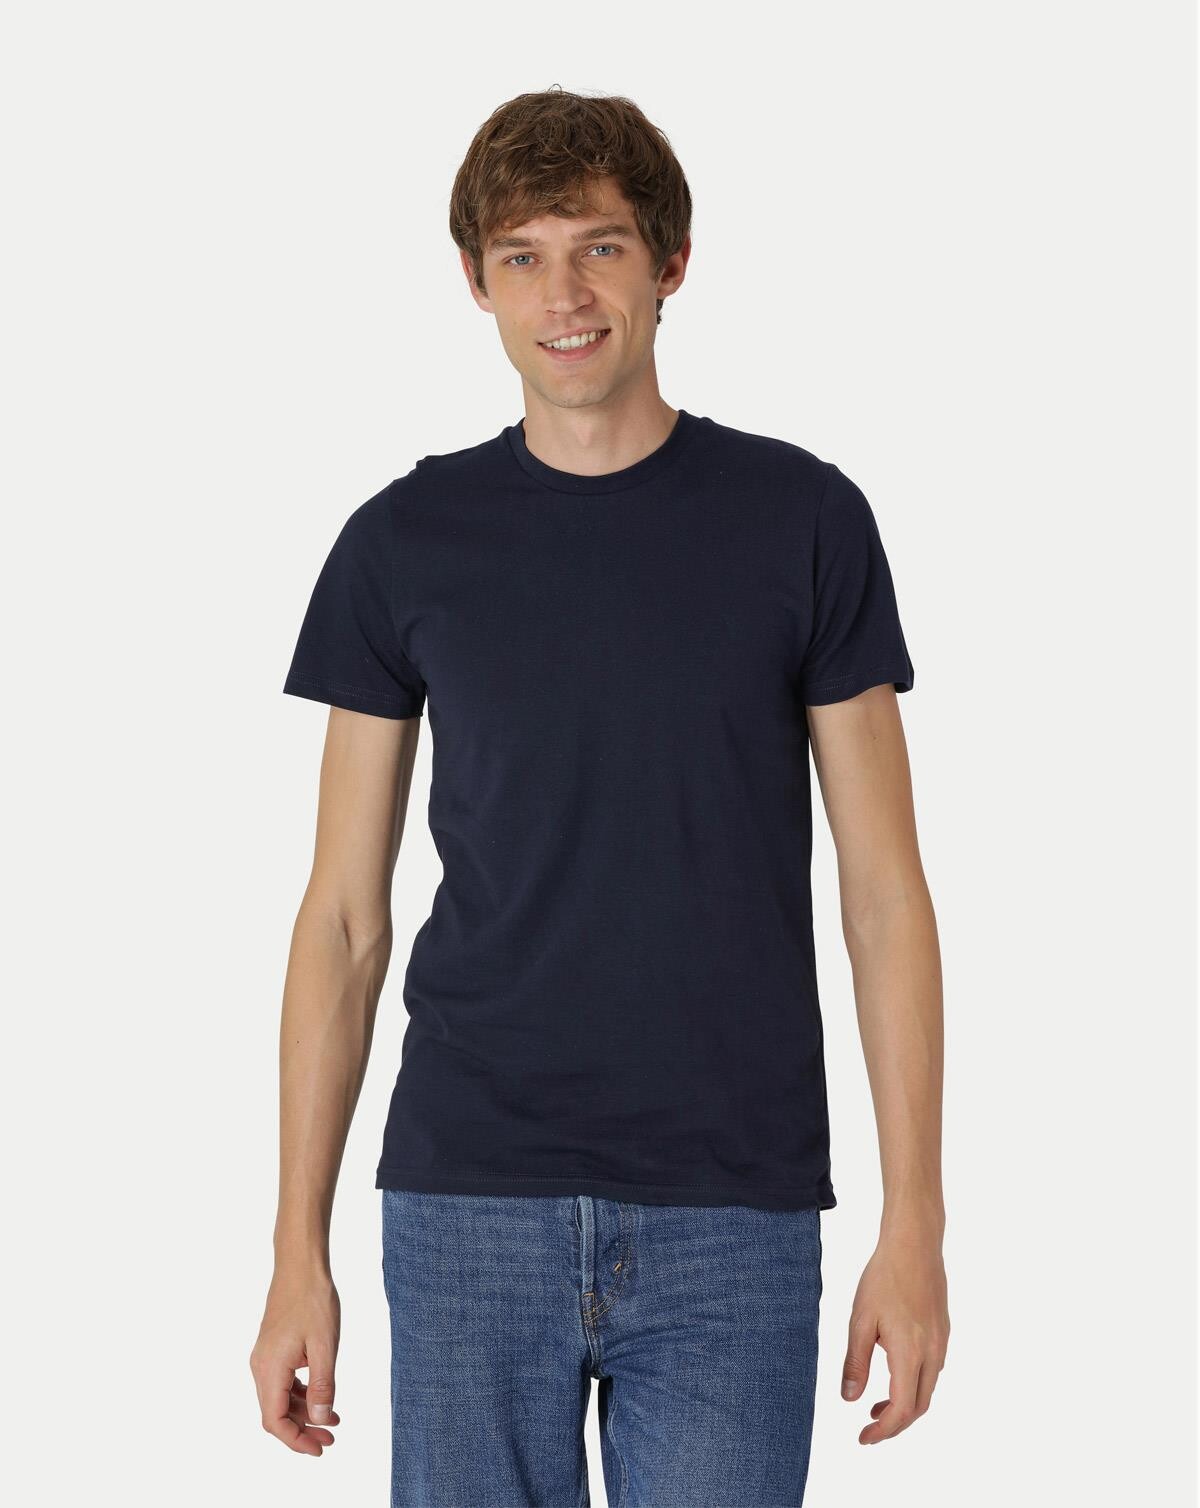 Neutral Økologisk T-shirt til - Tætsiddende (Navy, 3XL)